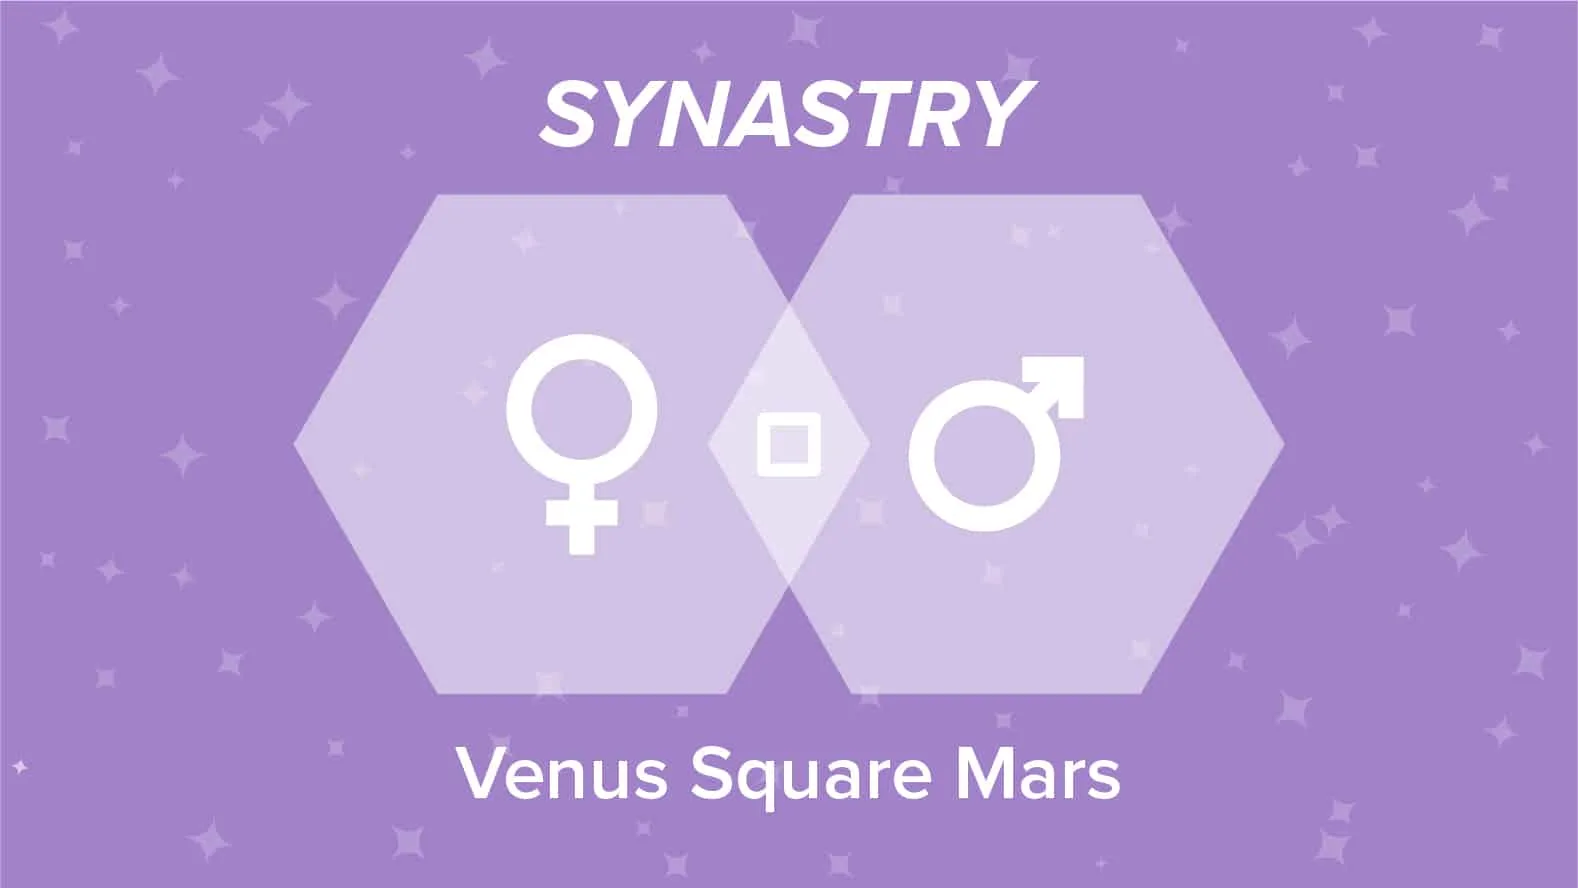 Venus Square Mars Synastry